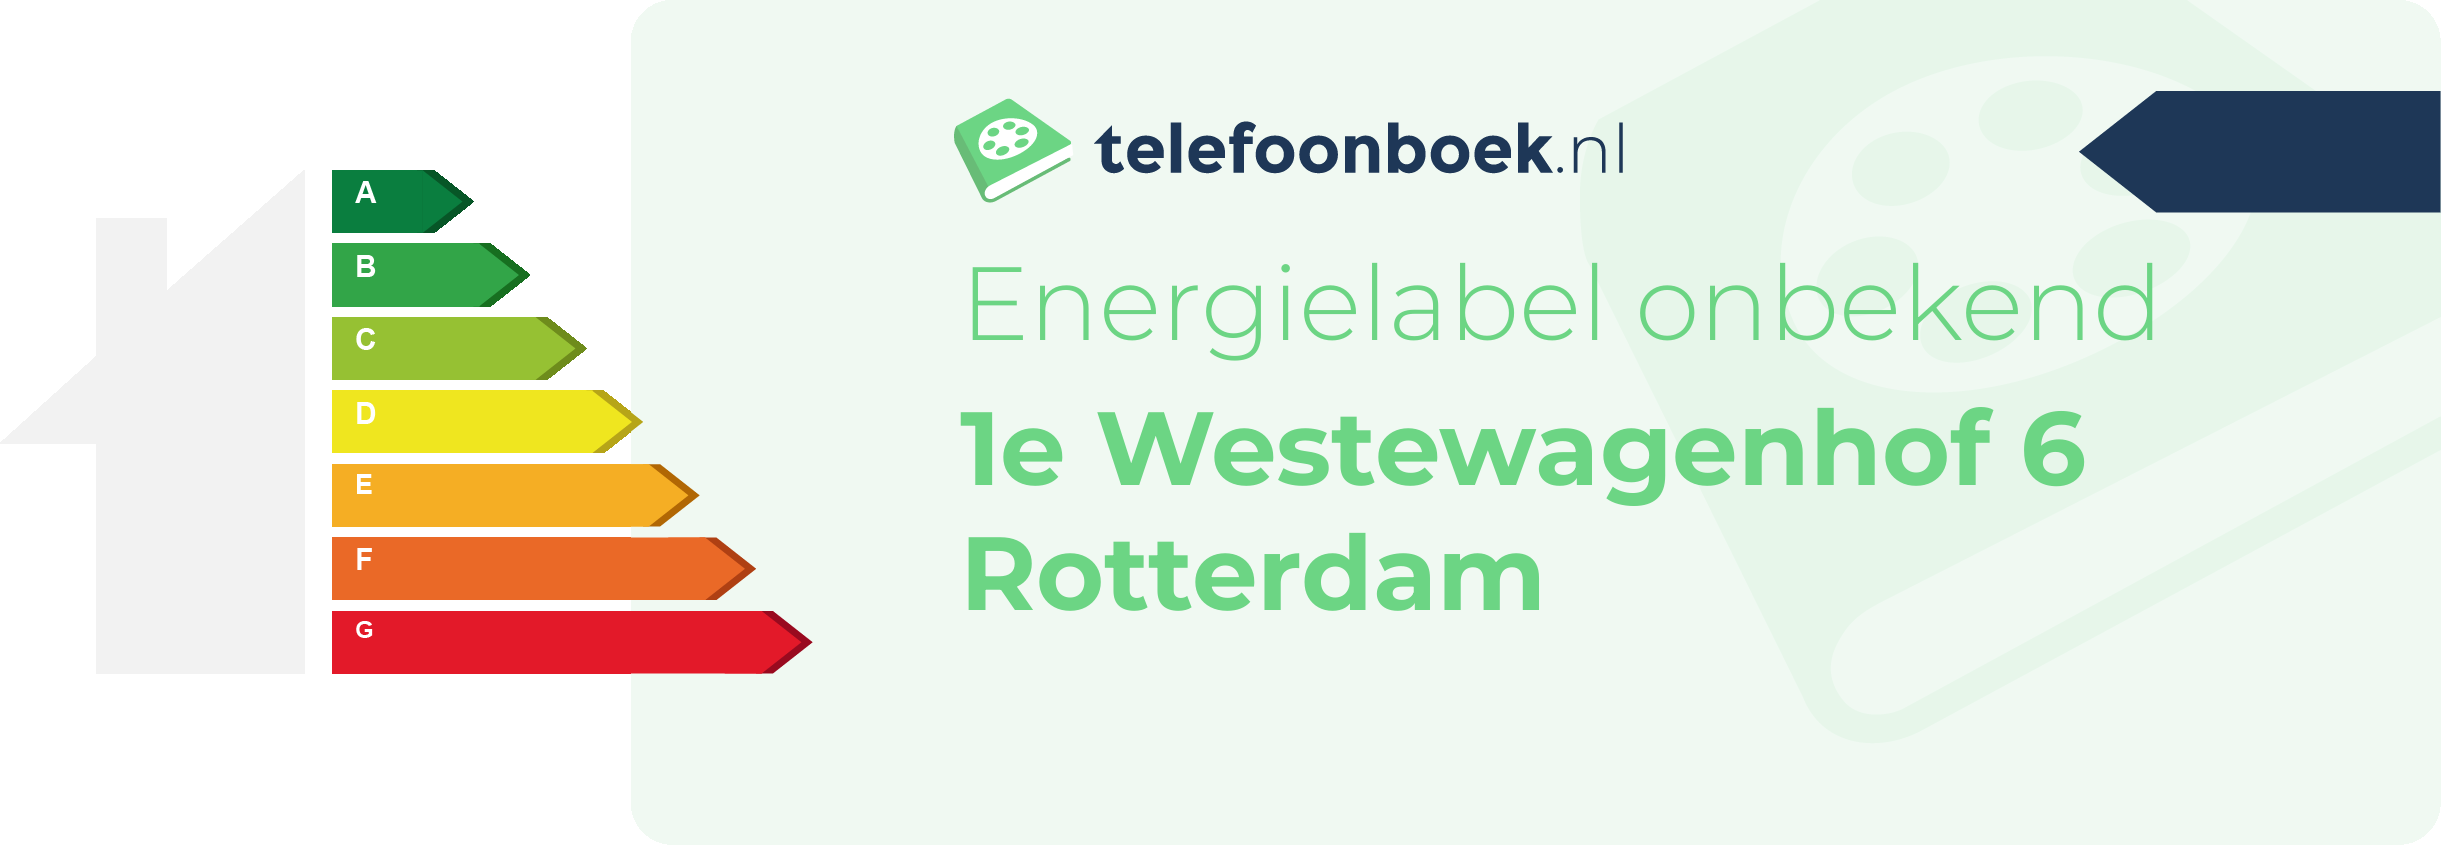 Energielabel 1e Westewagenhof 6 Rotterdam